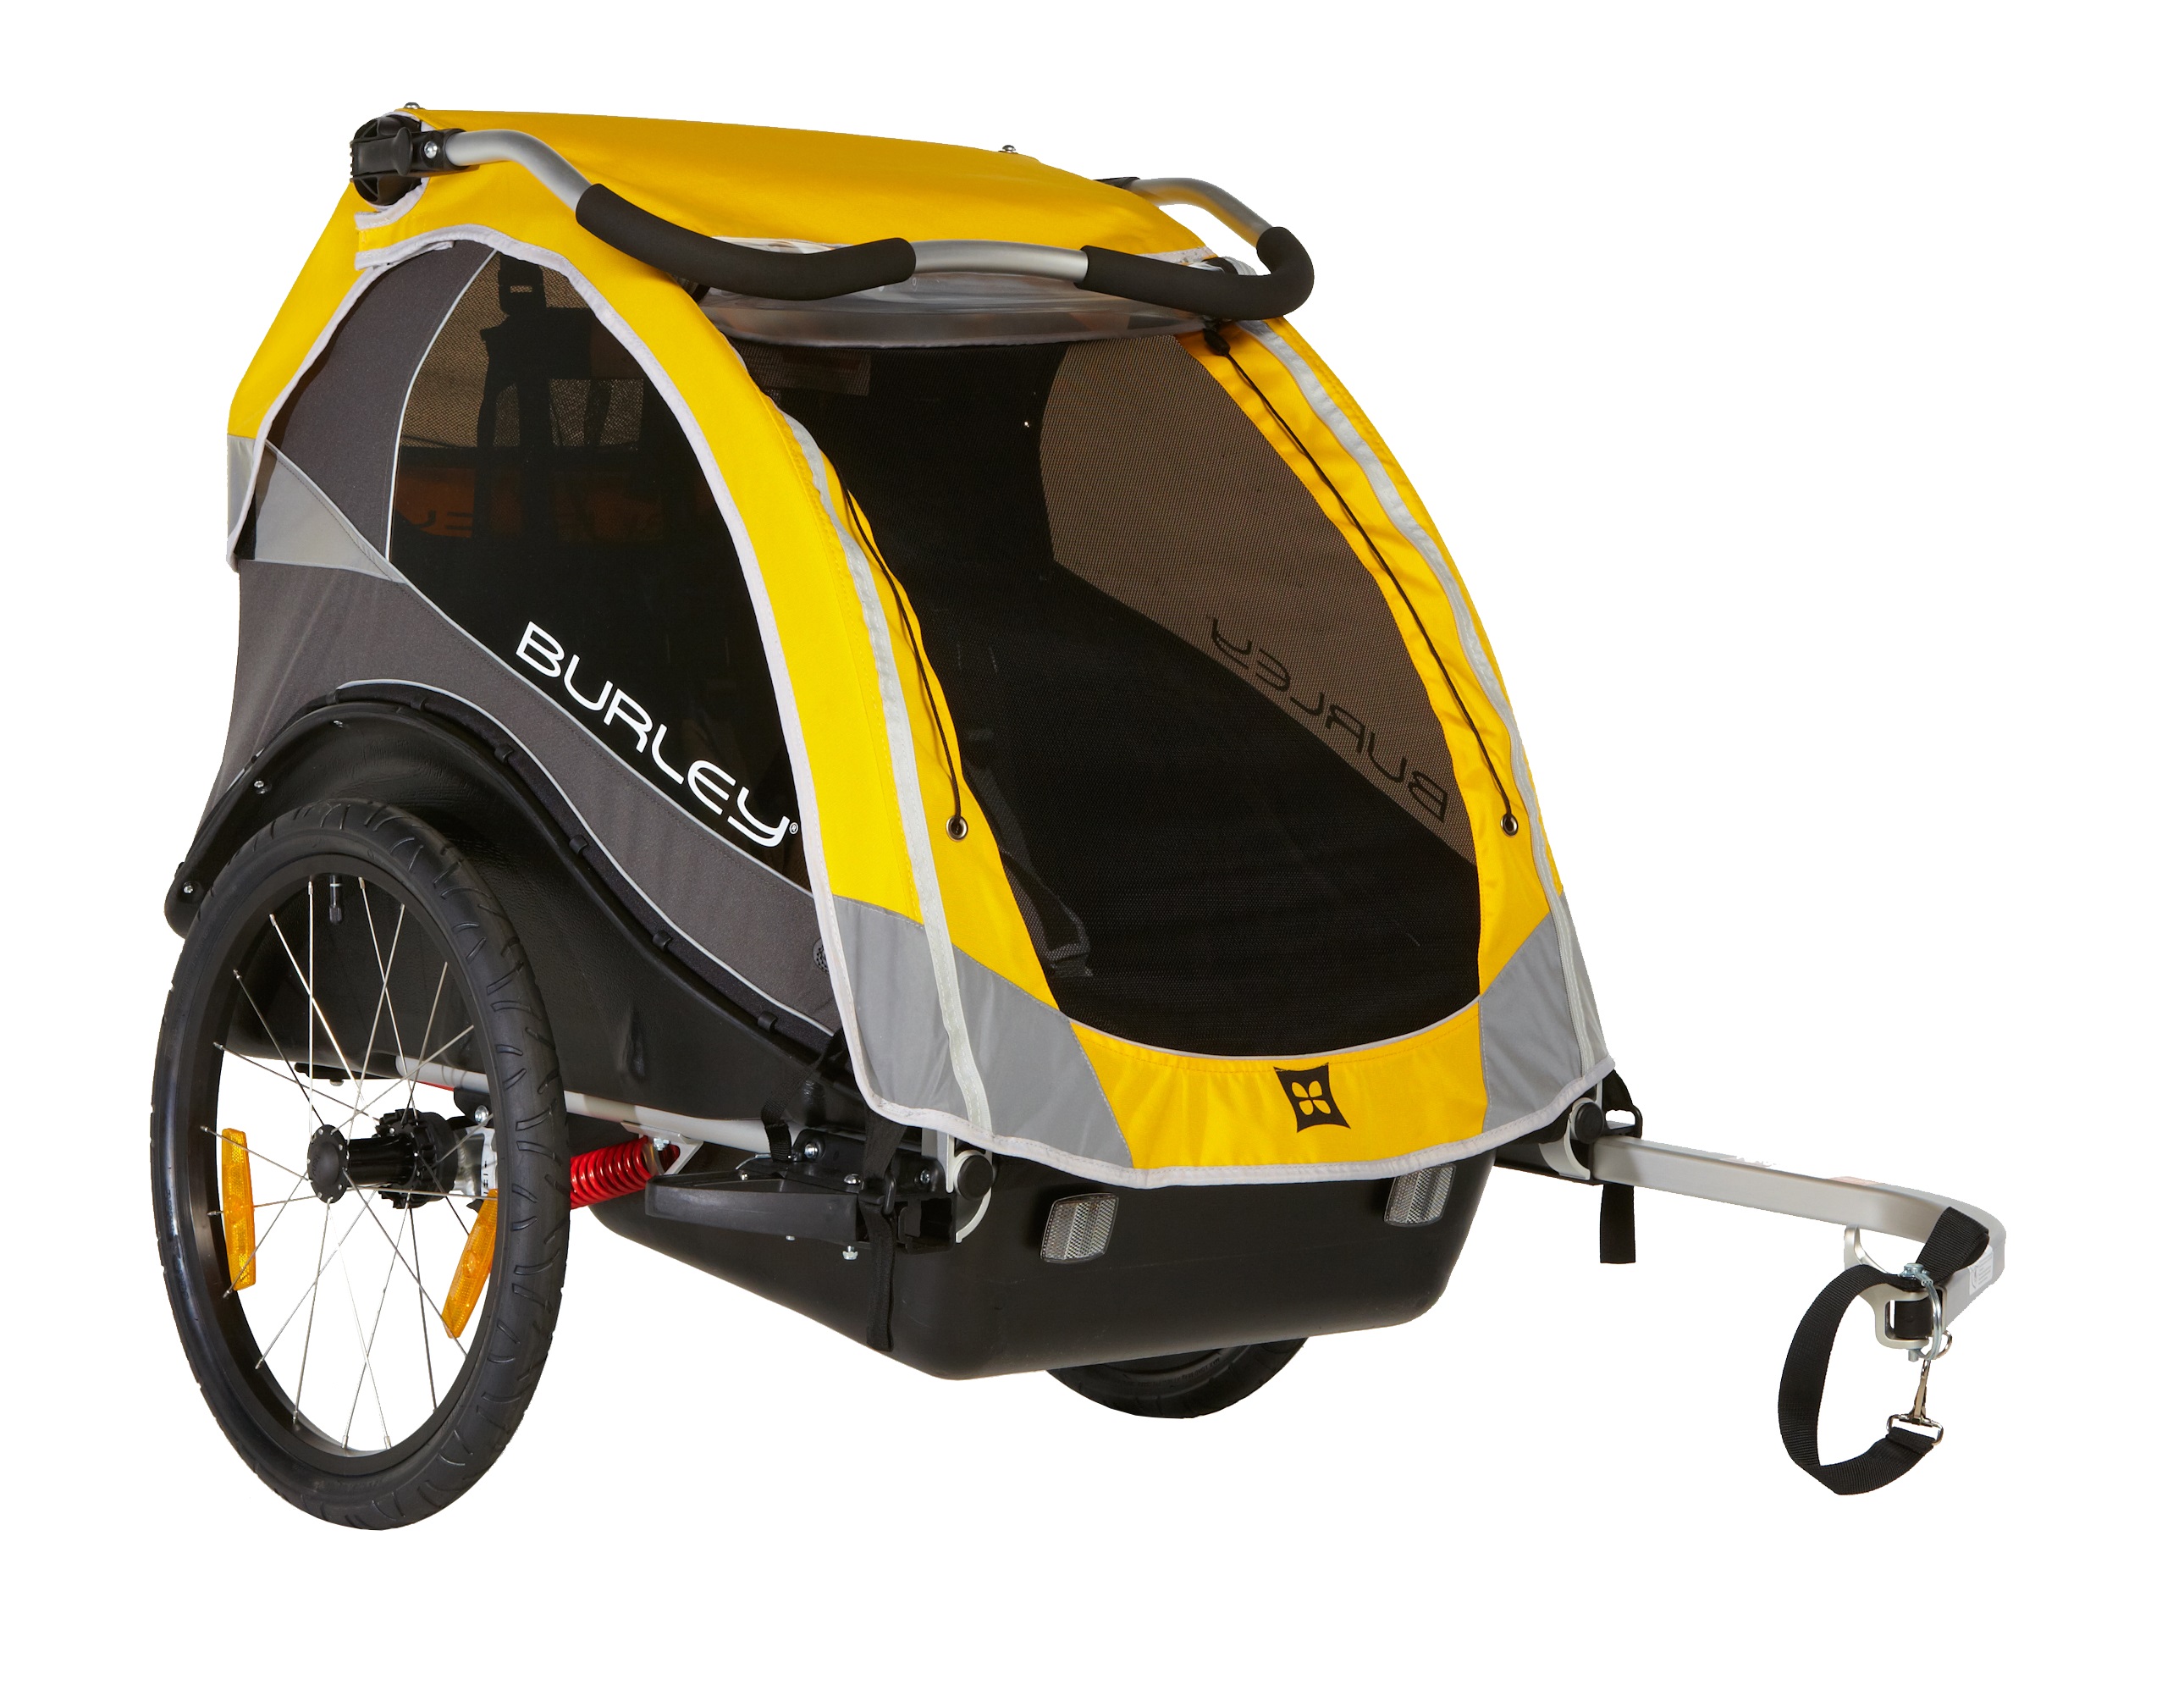 2014-2015 Rental Cub bicycle trailer